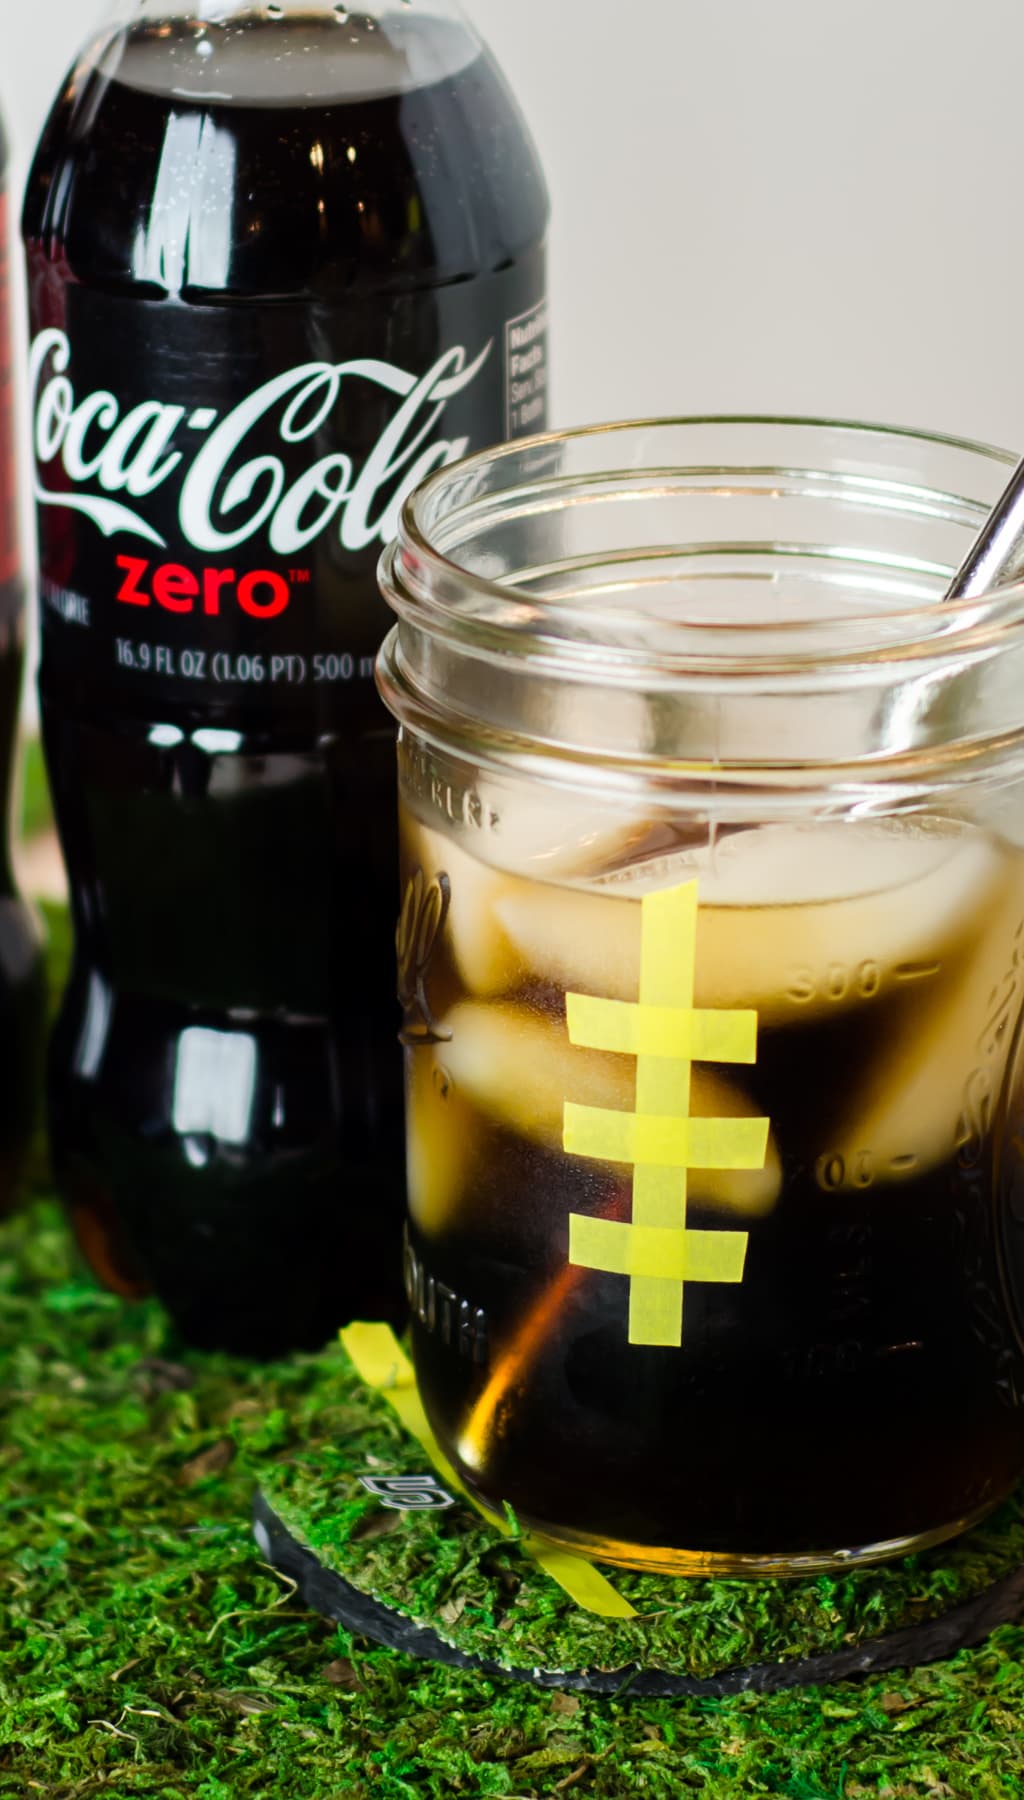 coke zero bottle and mason jar